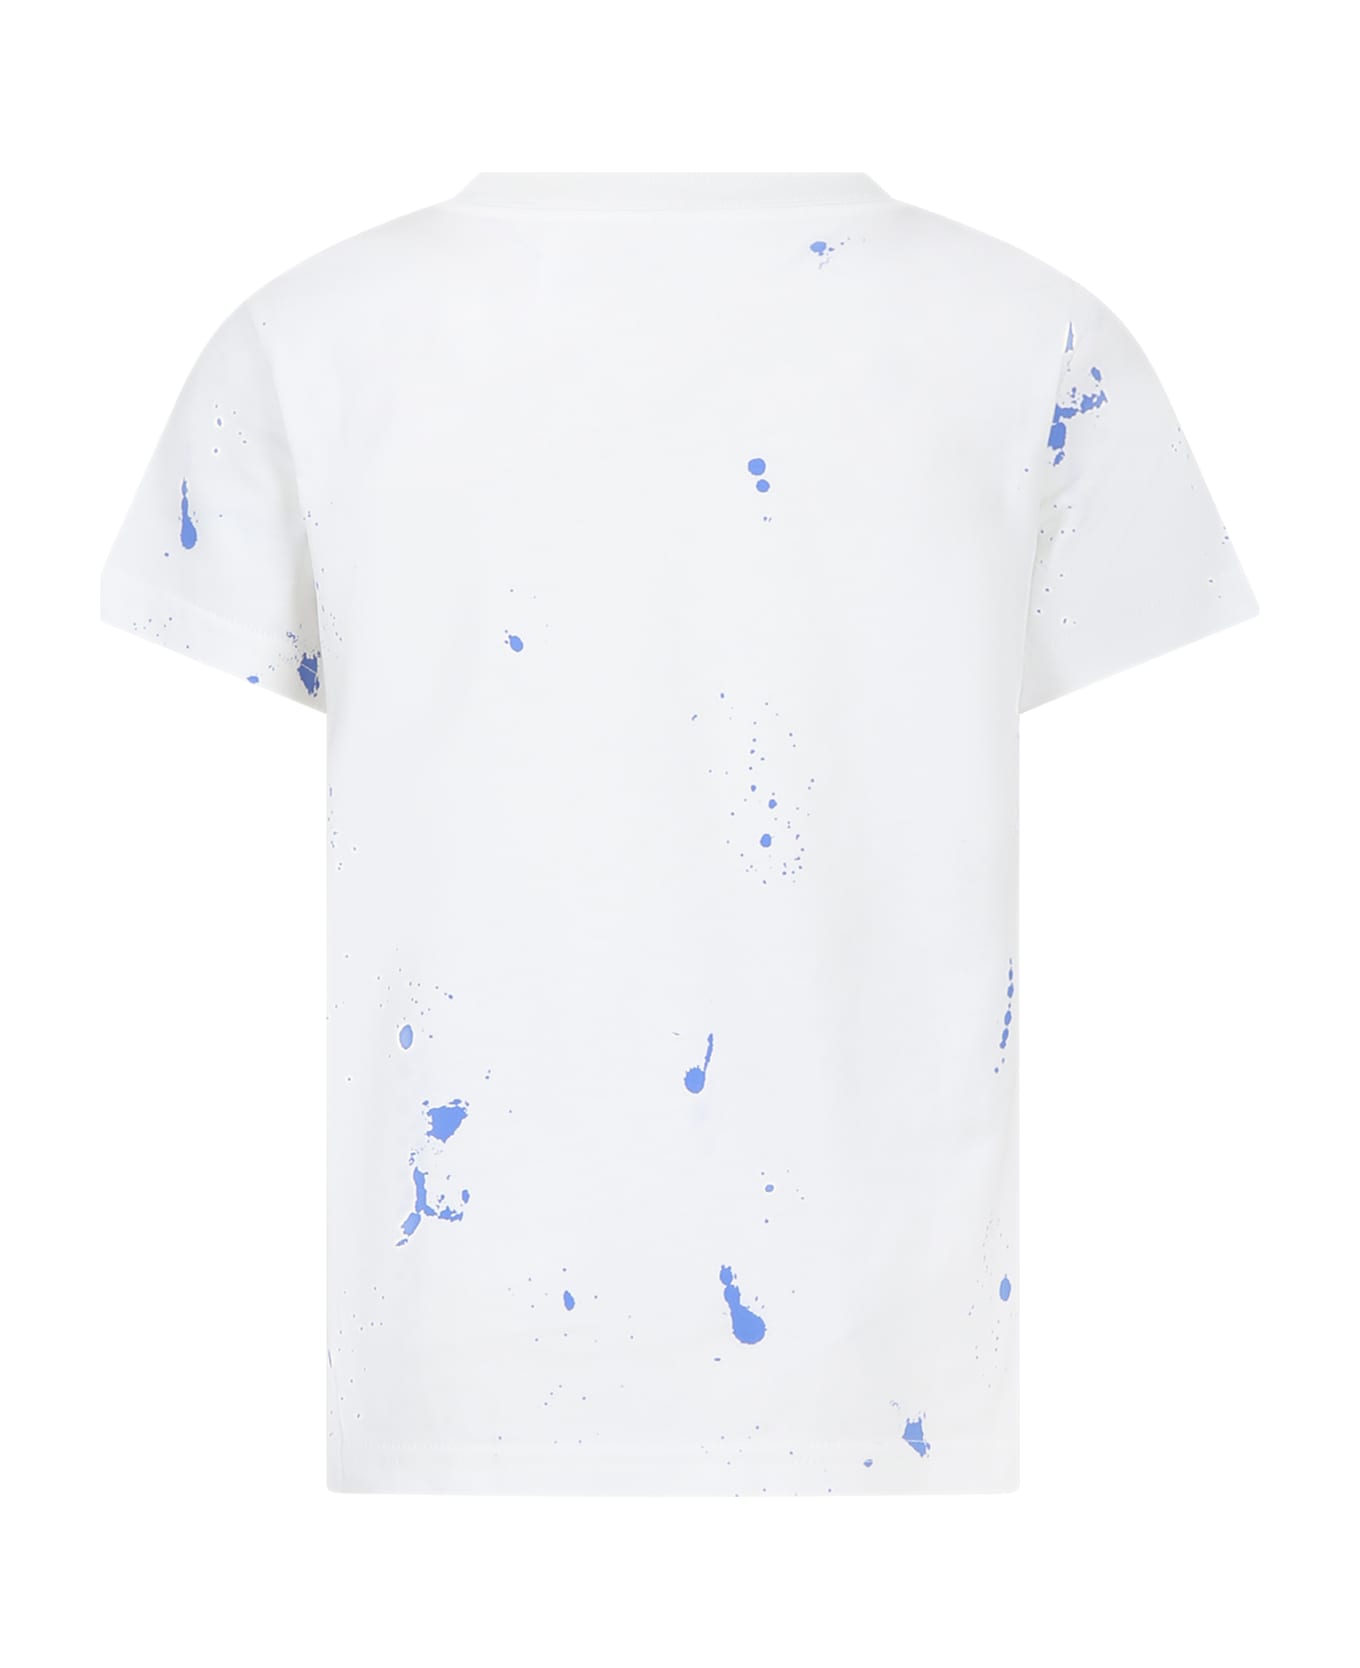 Ralph Lauren White T-shirt For Boy With Polo Bear - White